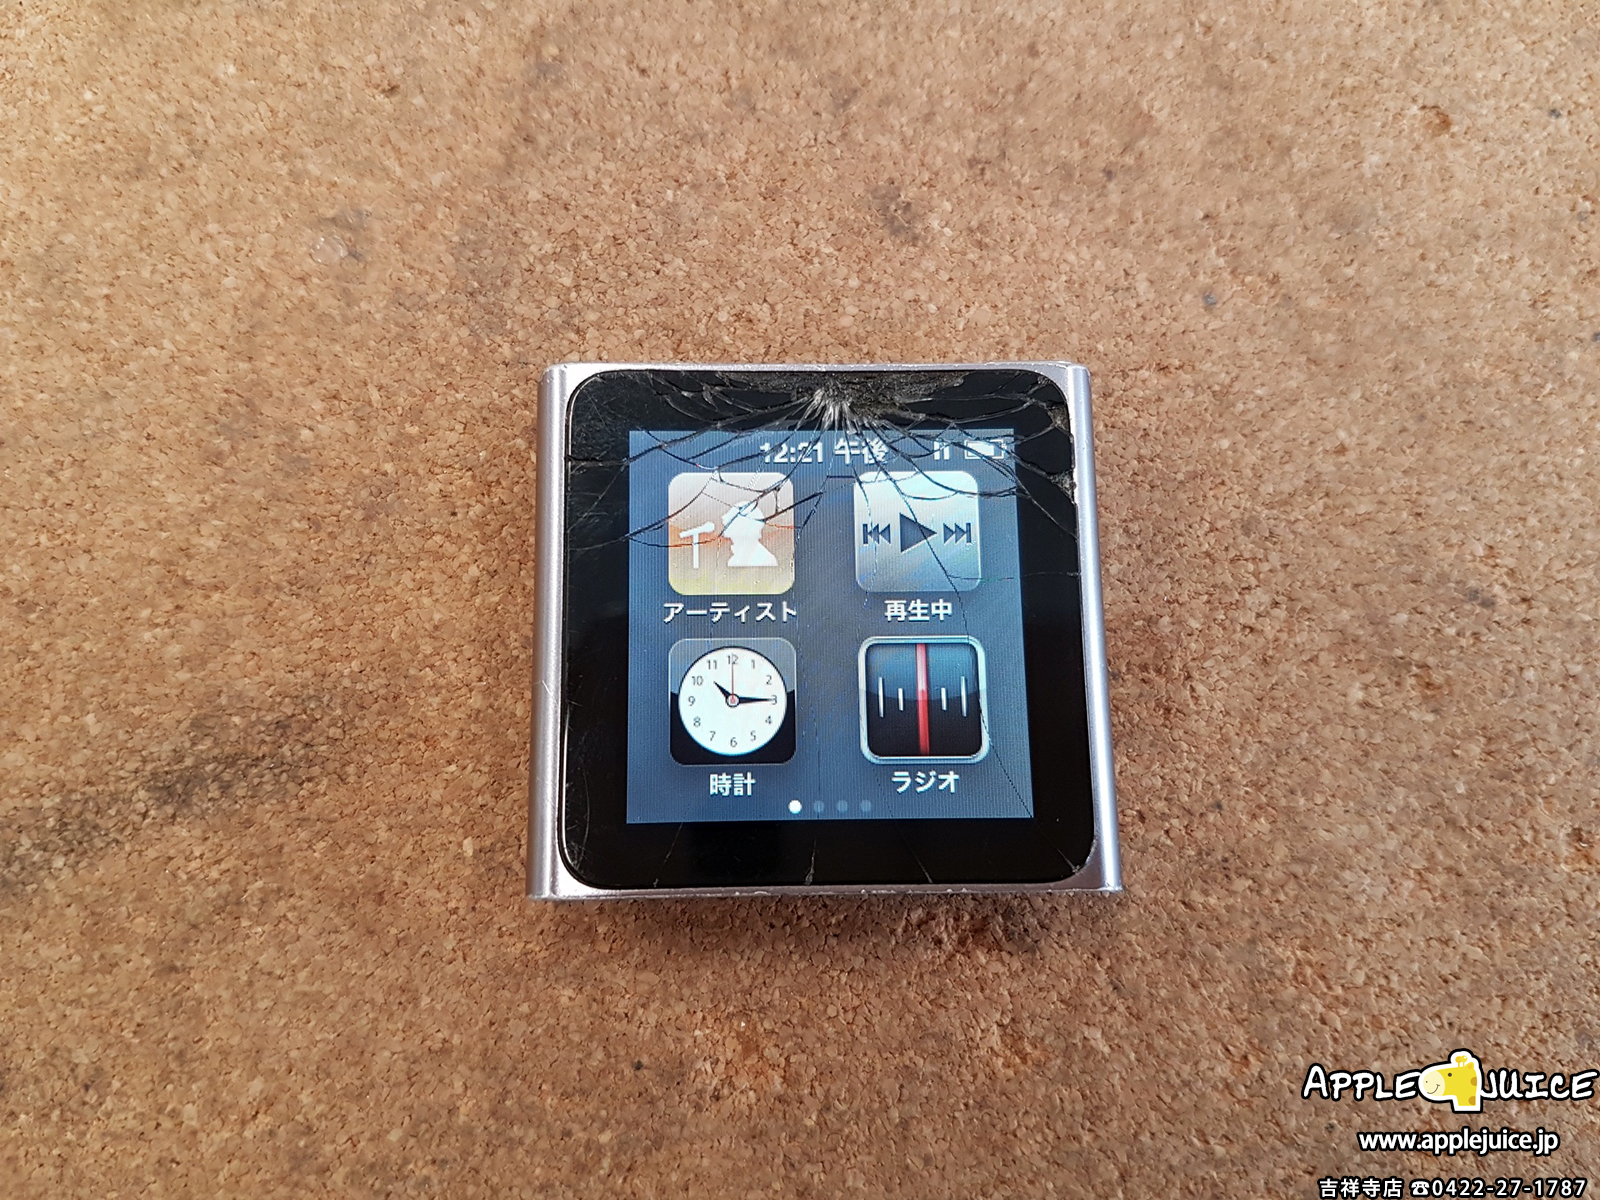 iPod nanoの修理も行っております！ iPod nano 6世代 液晶パネル修理例 